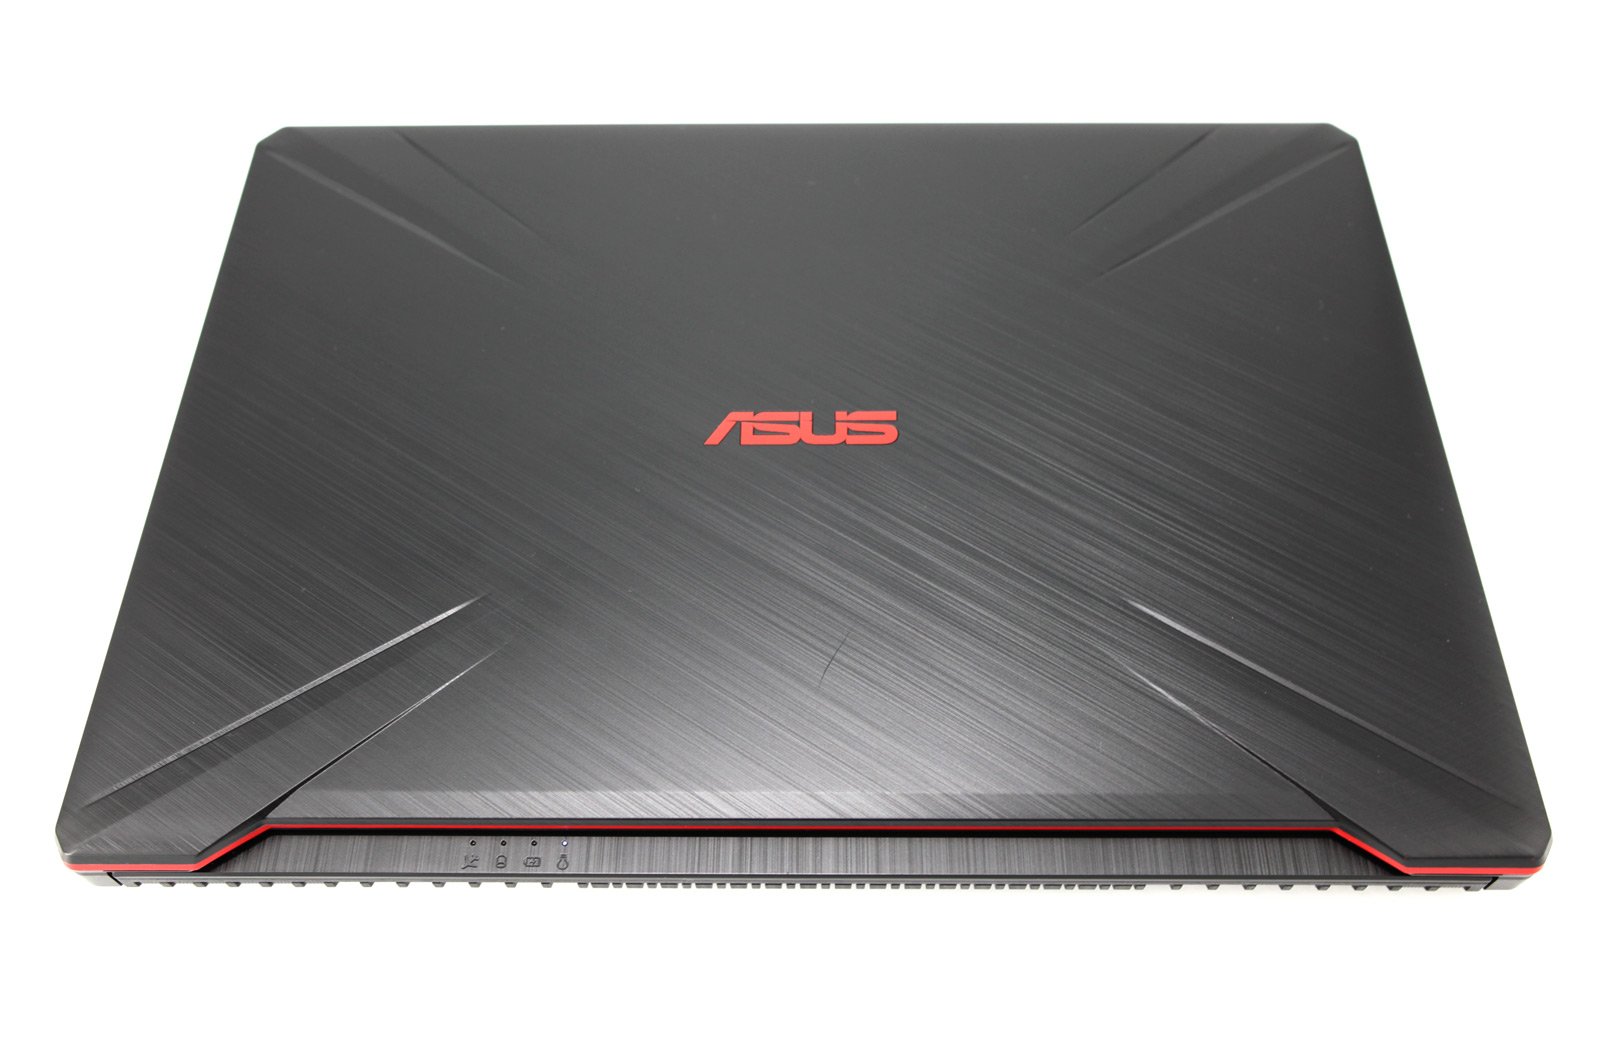 ASUS FX705GD 17.3" Gaming Laptop: I5-8300H, GTX 1050, 256GB+1TB, 8GB RAM - CruiseTech